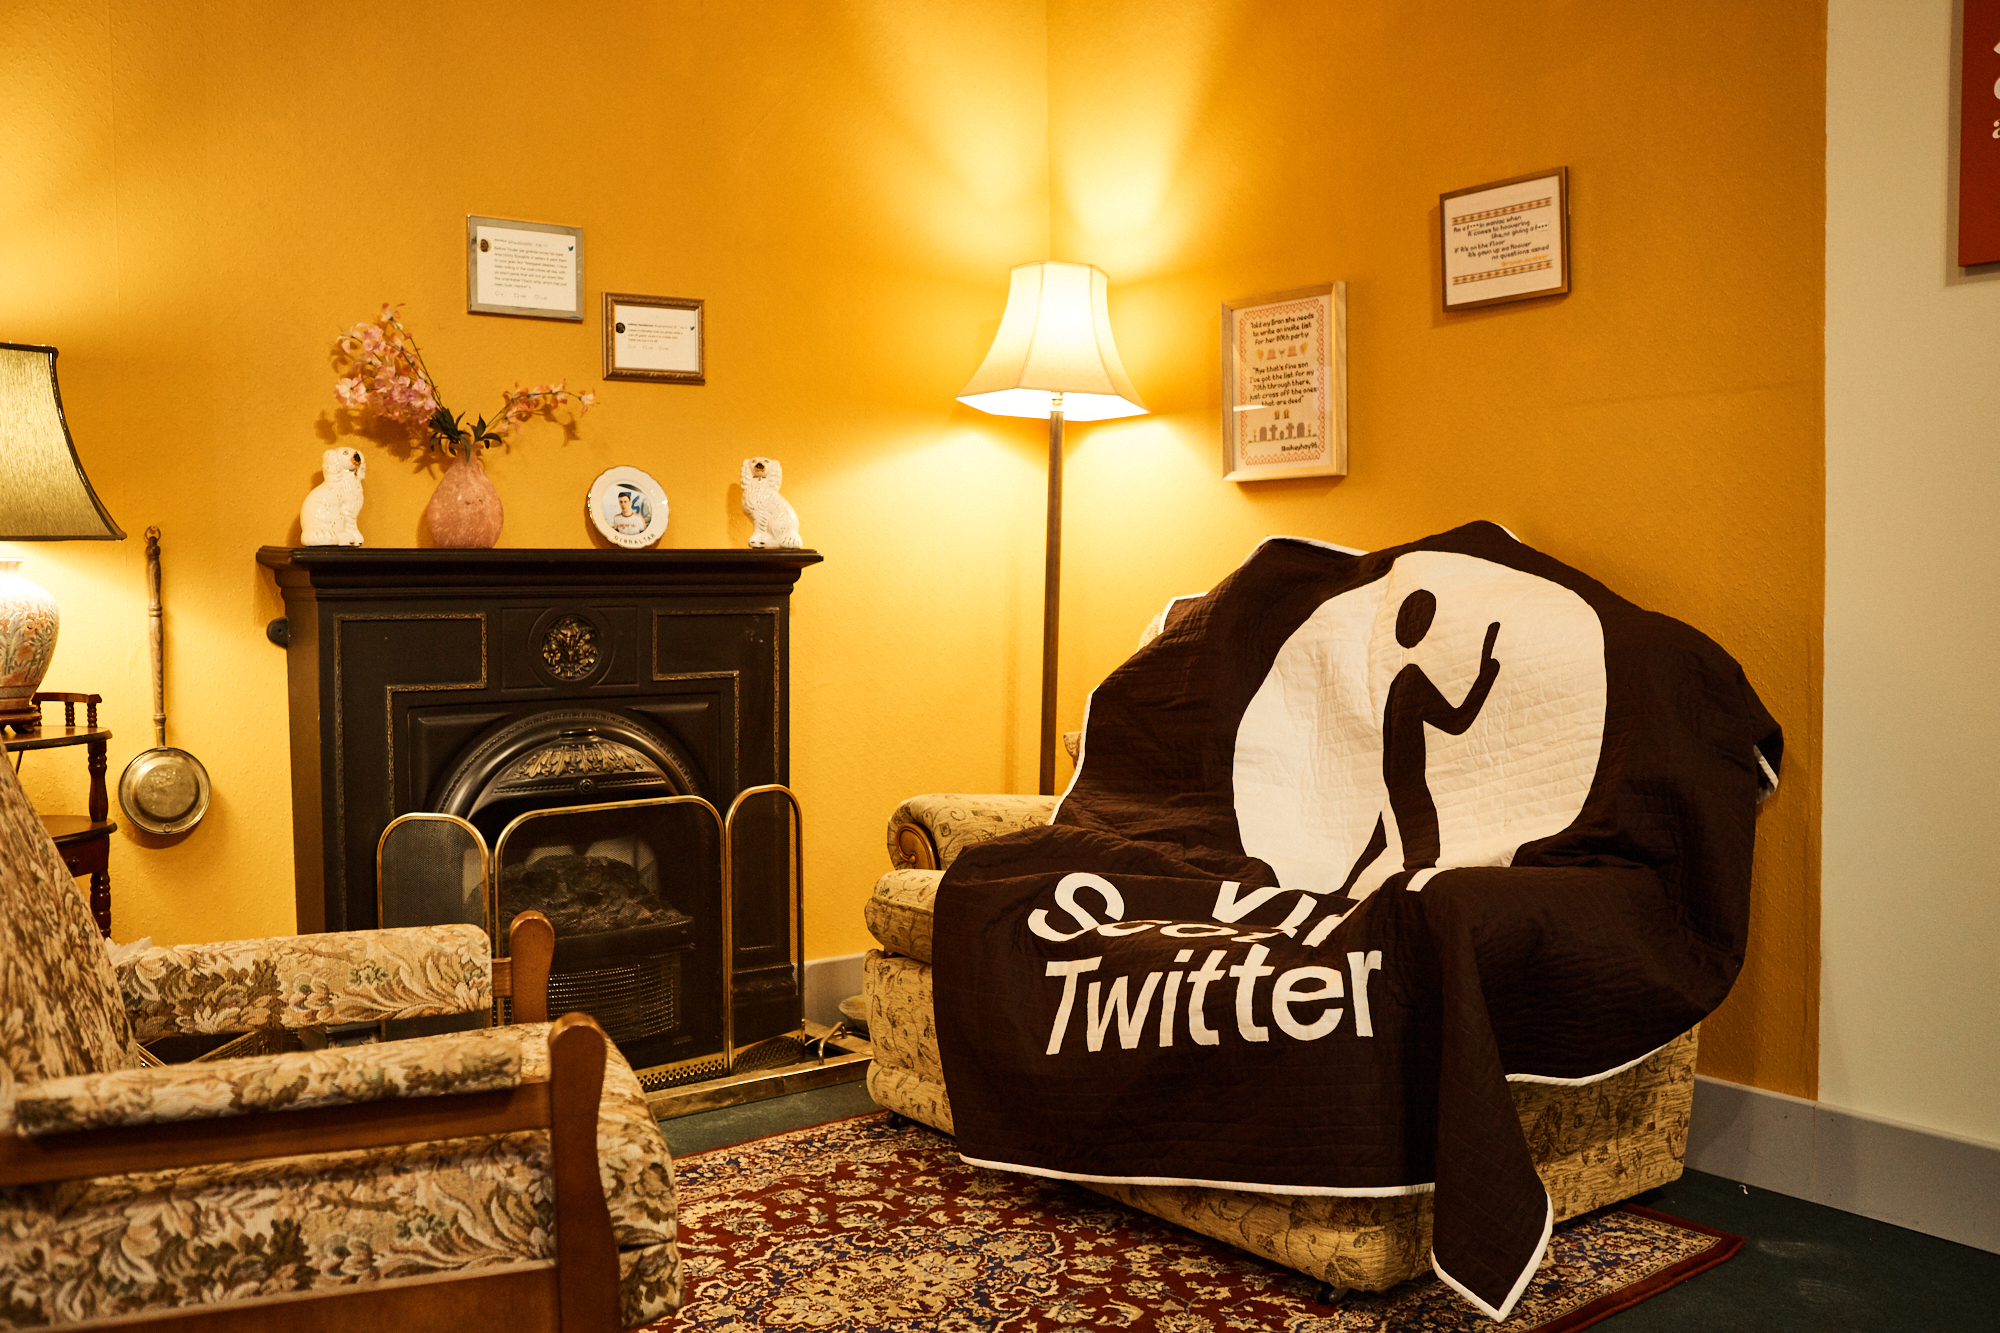 Our recreation of a Scottish Gran's living room at the Visit #ScottishTwitter centre